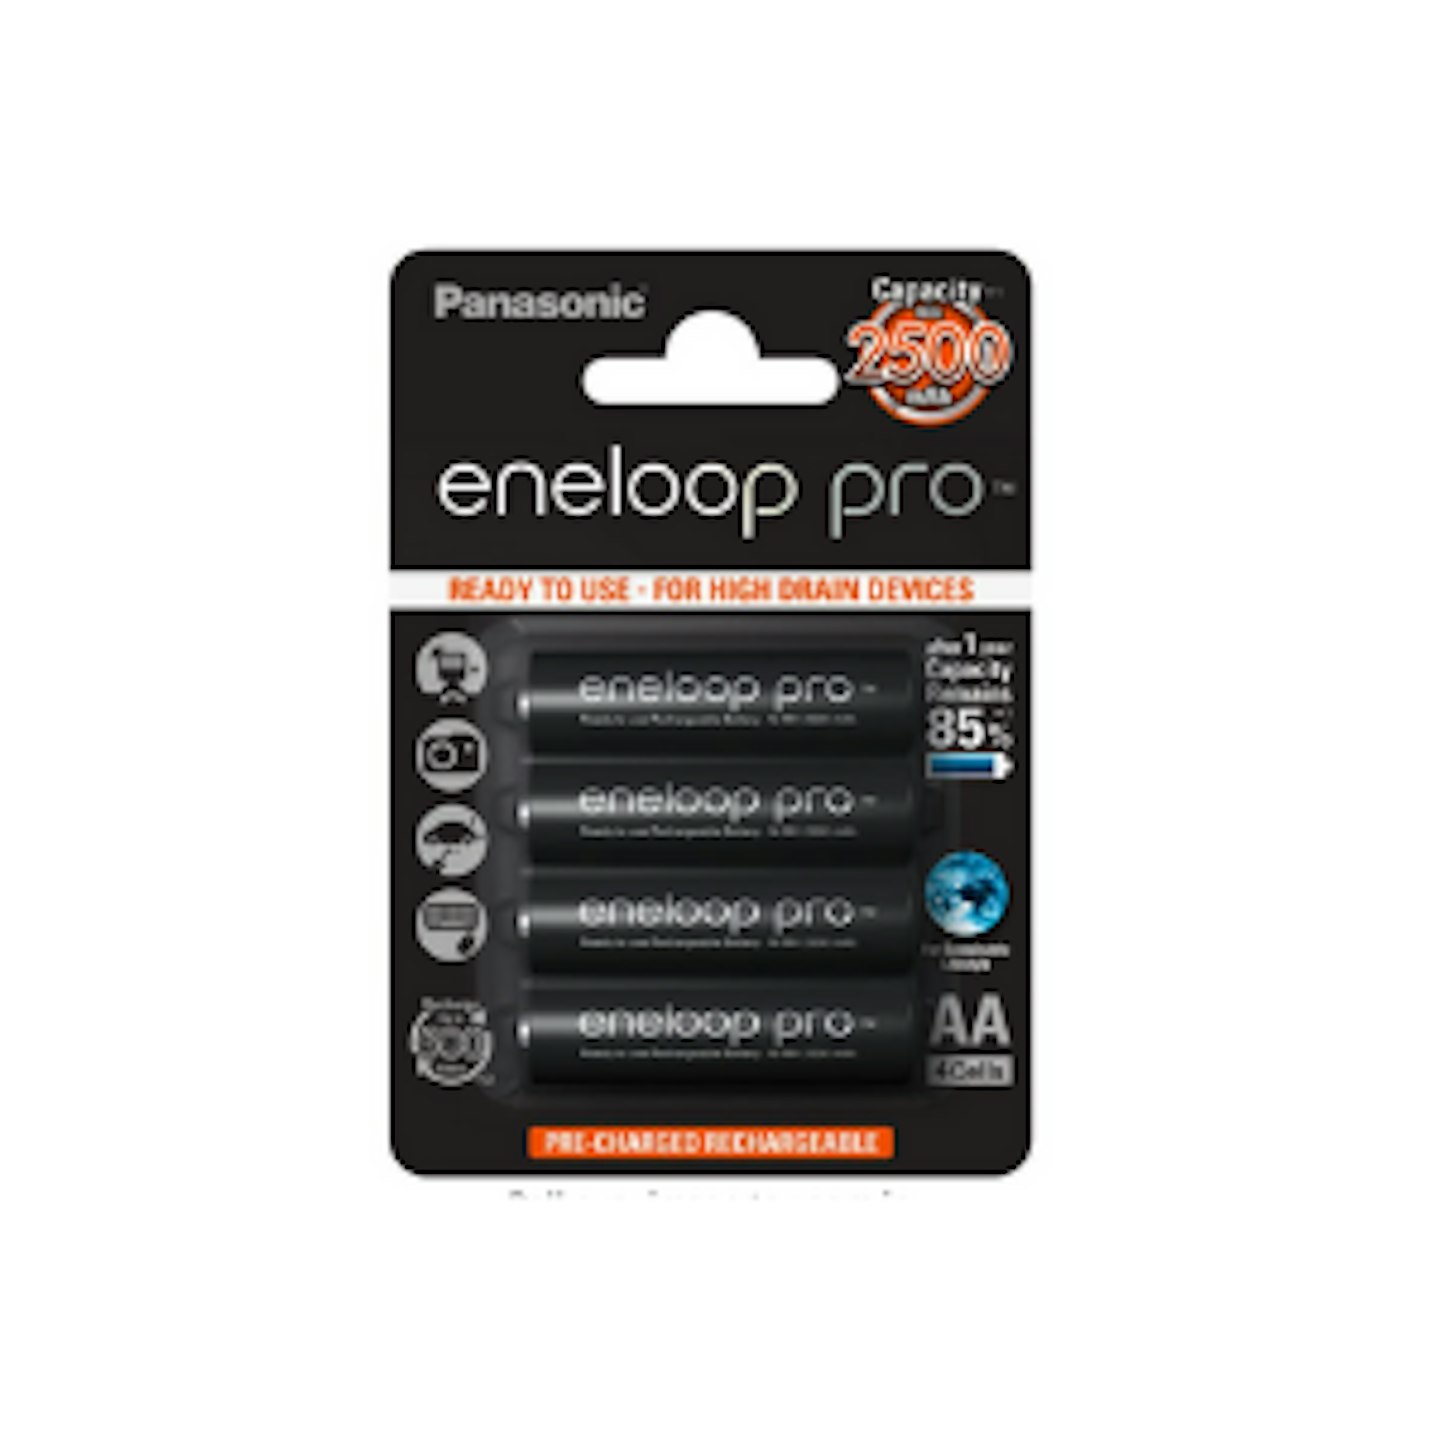 Panasonic Eneloop Pro AA batteries